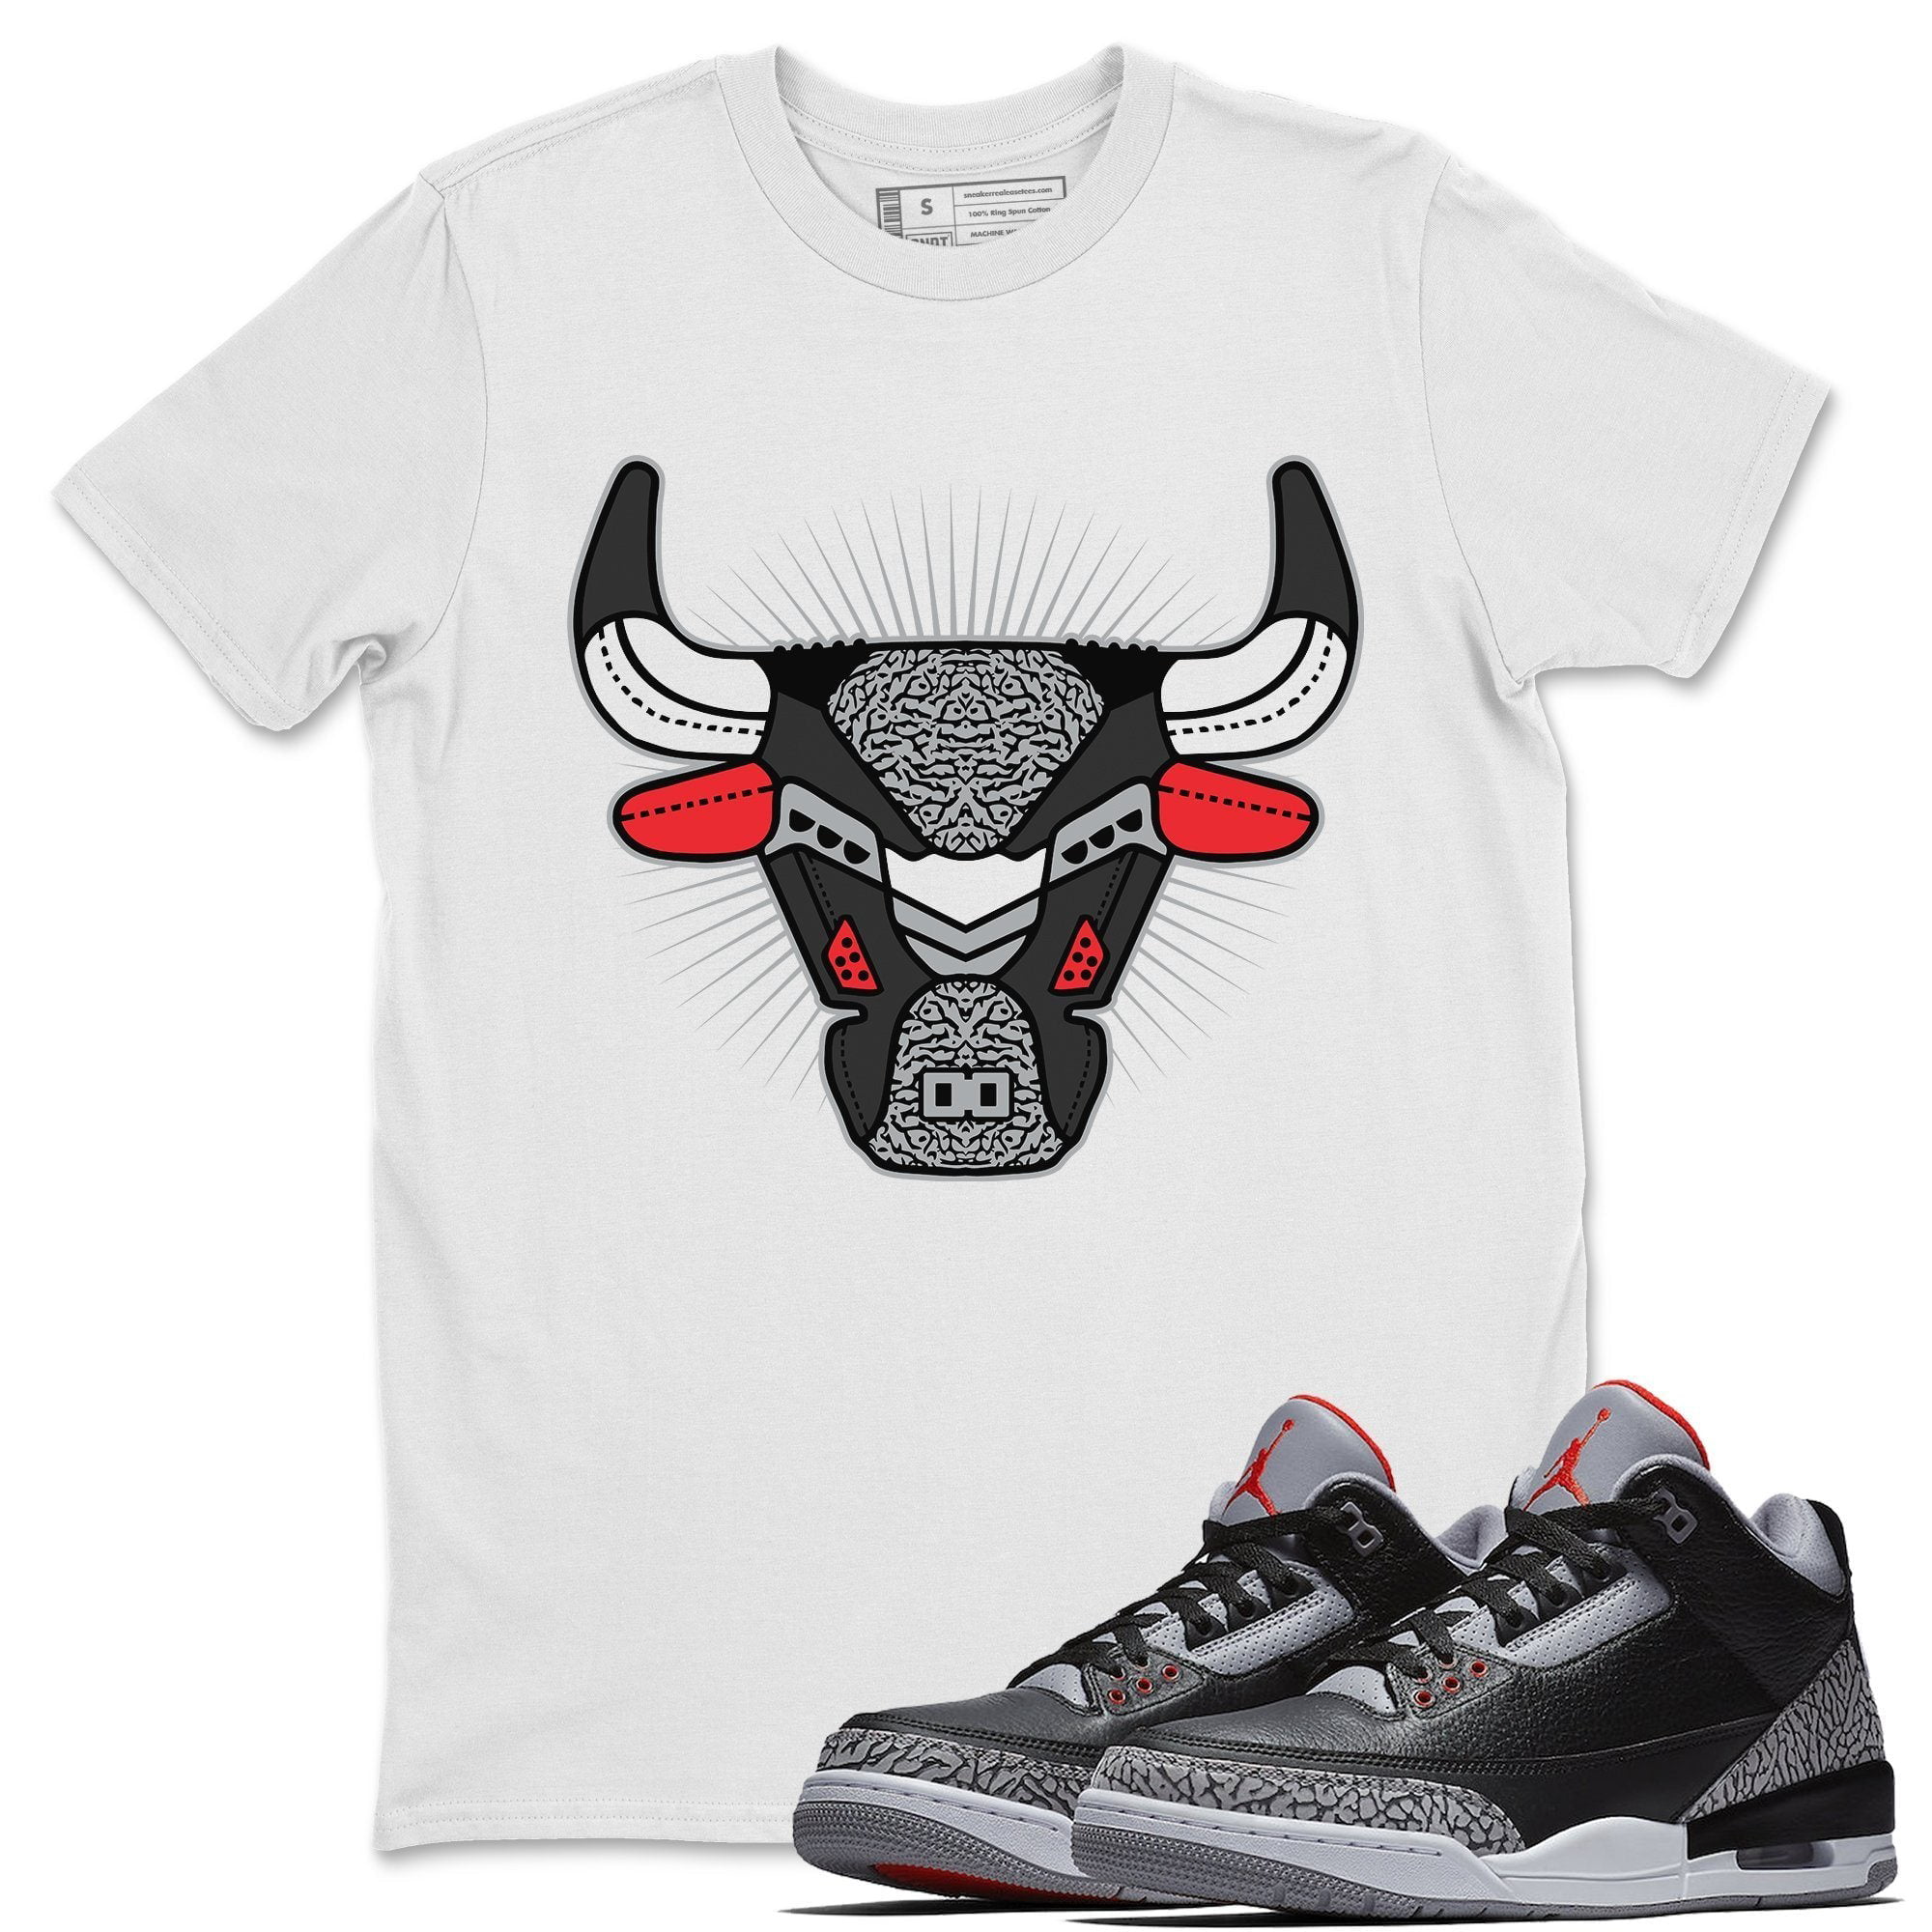 Bull Head White T-Shirt Jordan 3 Black Cement Sneaker Match Outfit - AJ3 (White / Medium) - Walmart.com